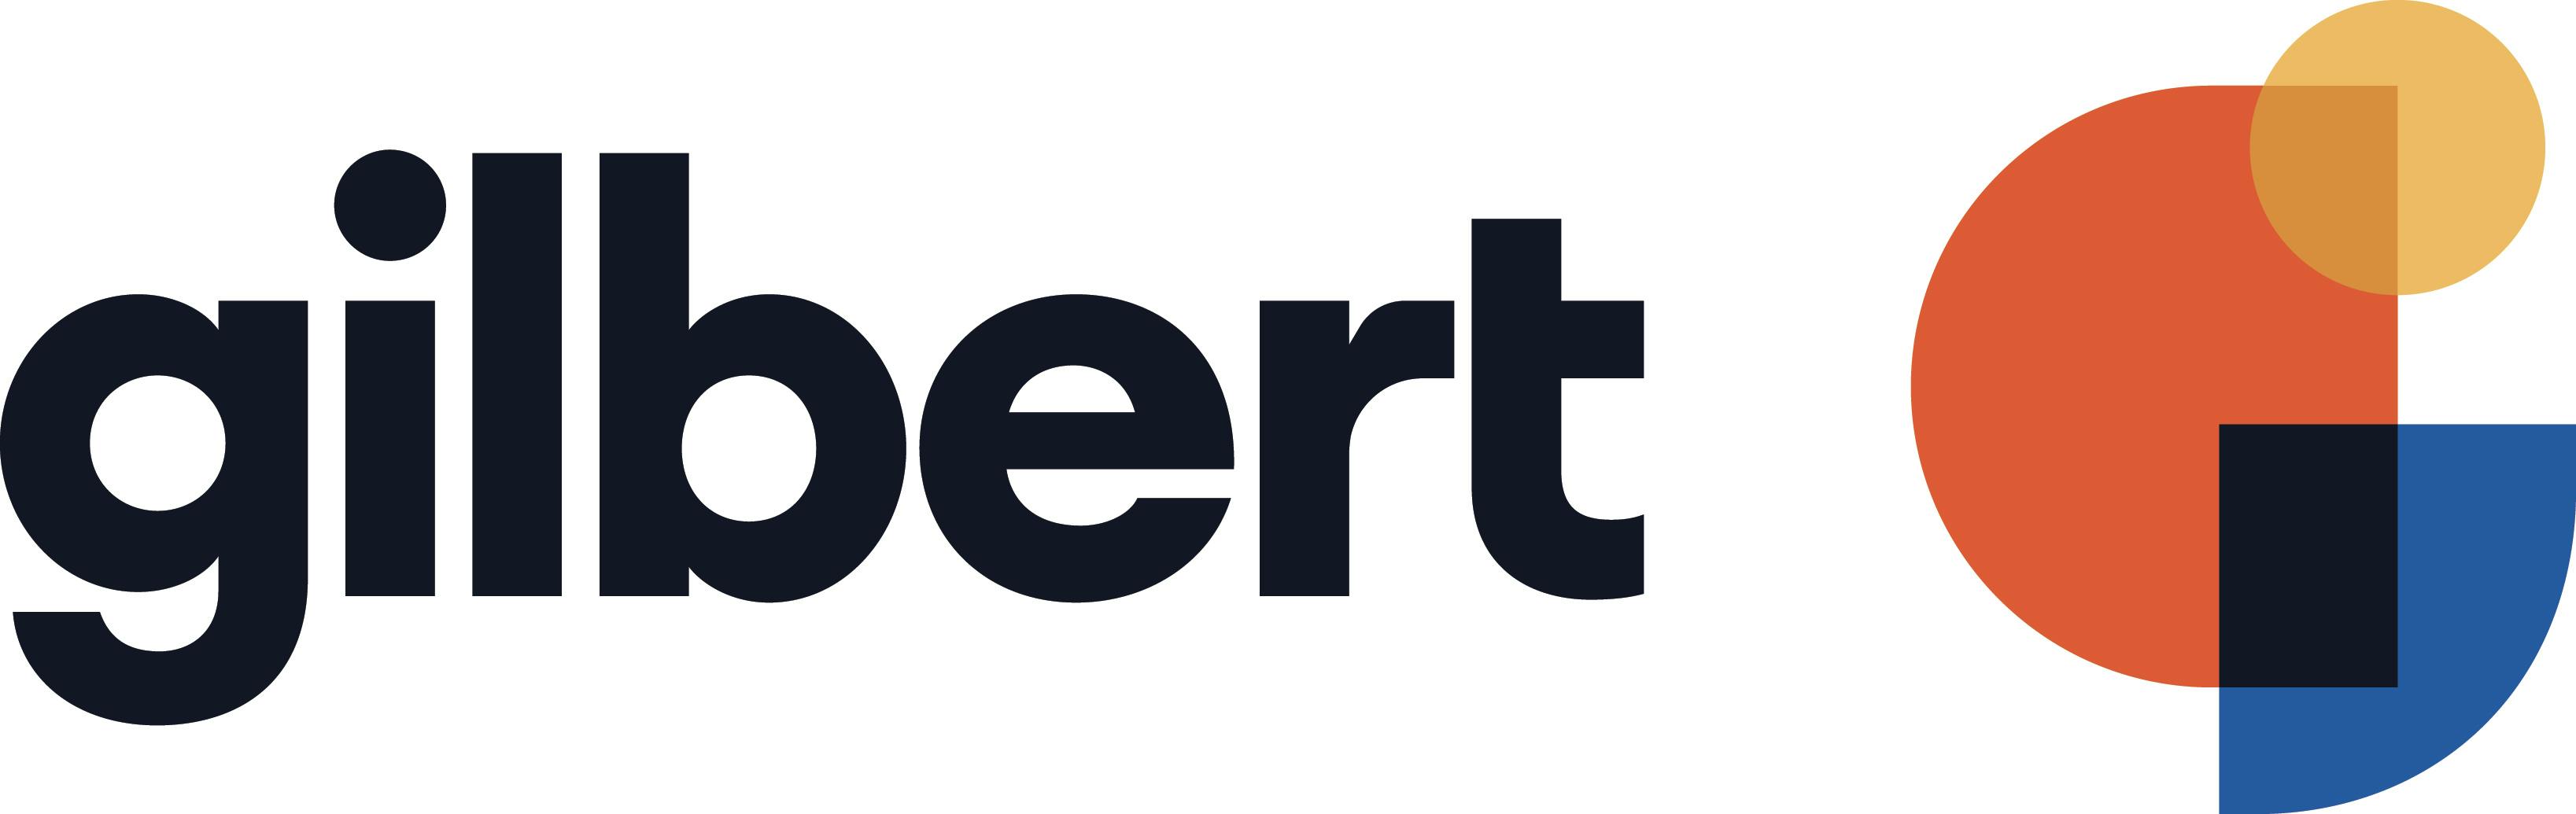 City of Gilbert Logo